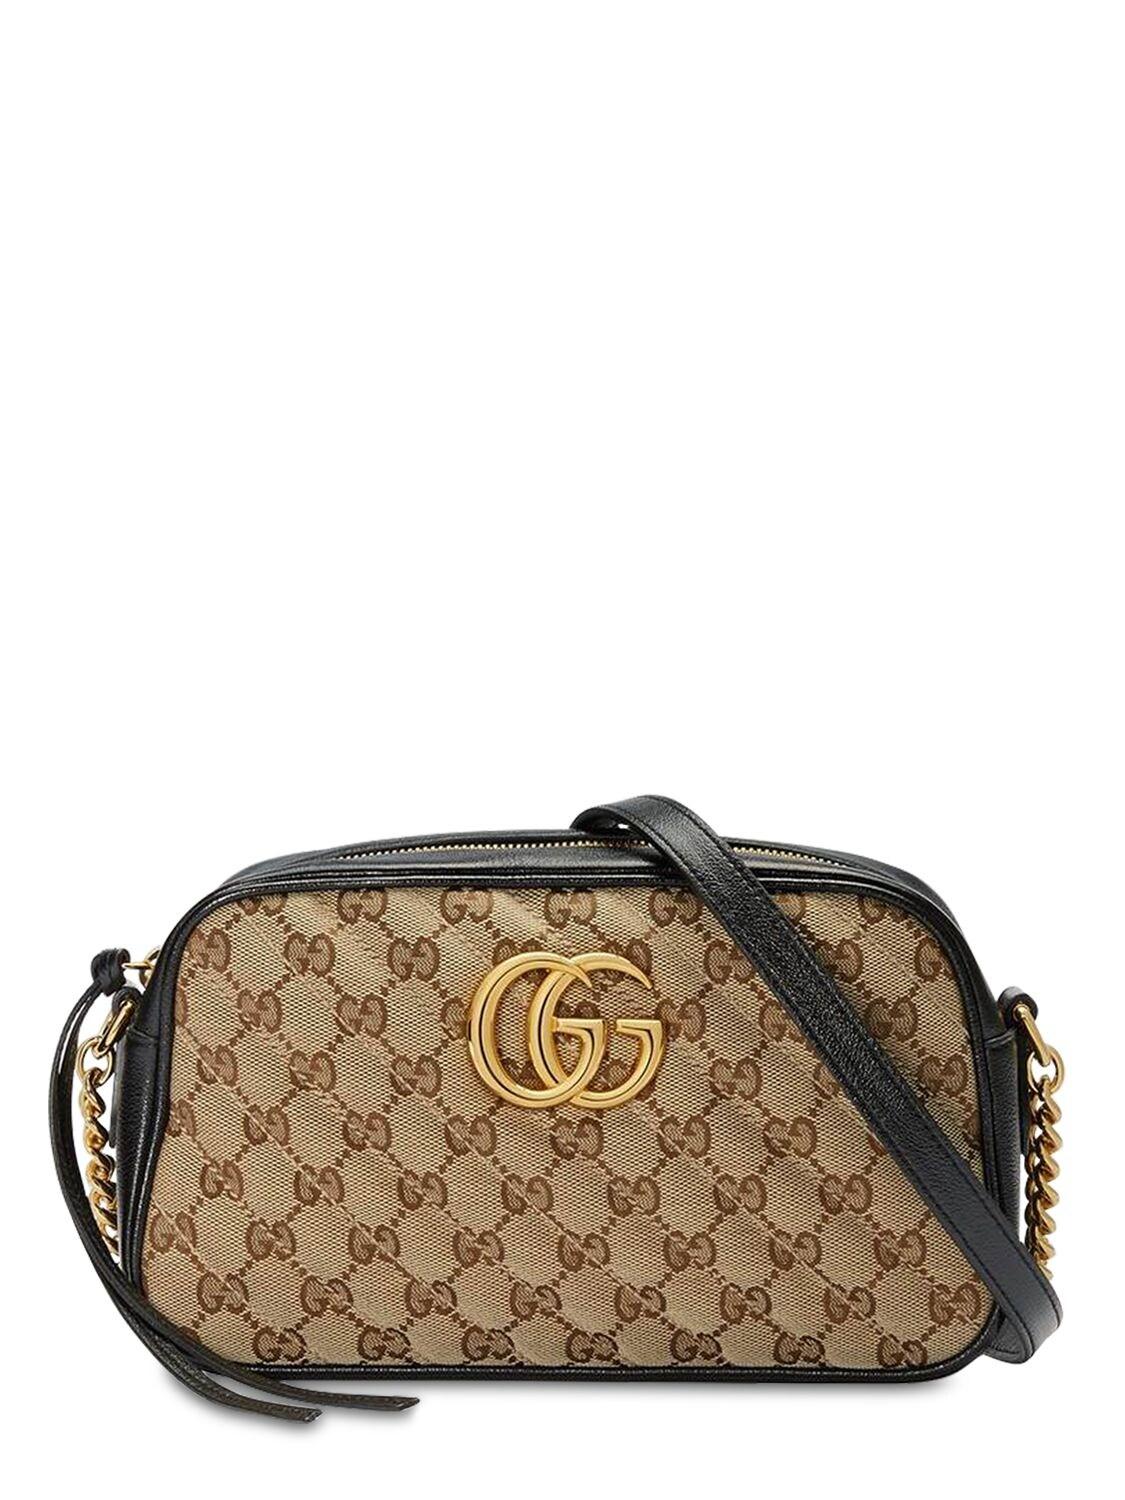 Gucci Sm Gg Marmont Original Gg Camera Bag in Brown/Black 